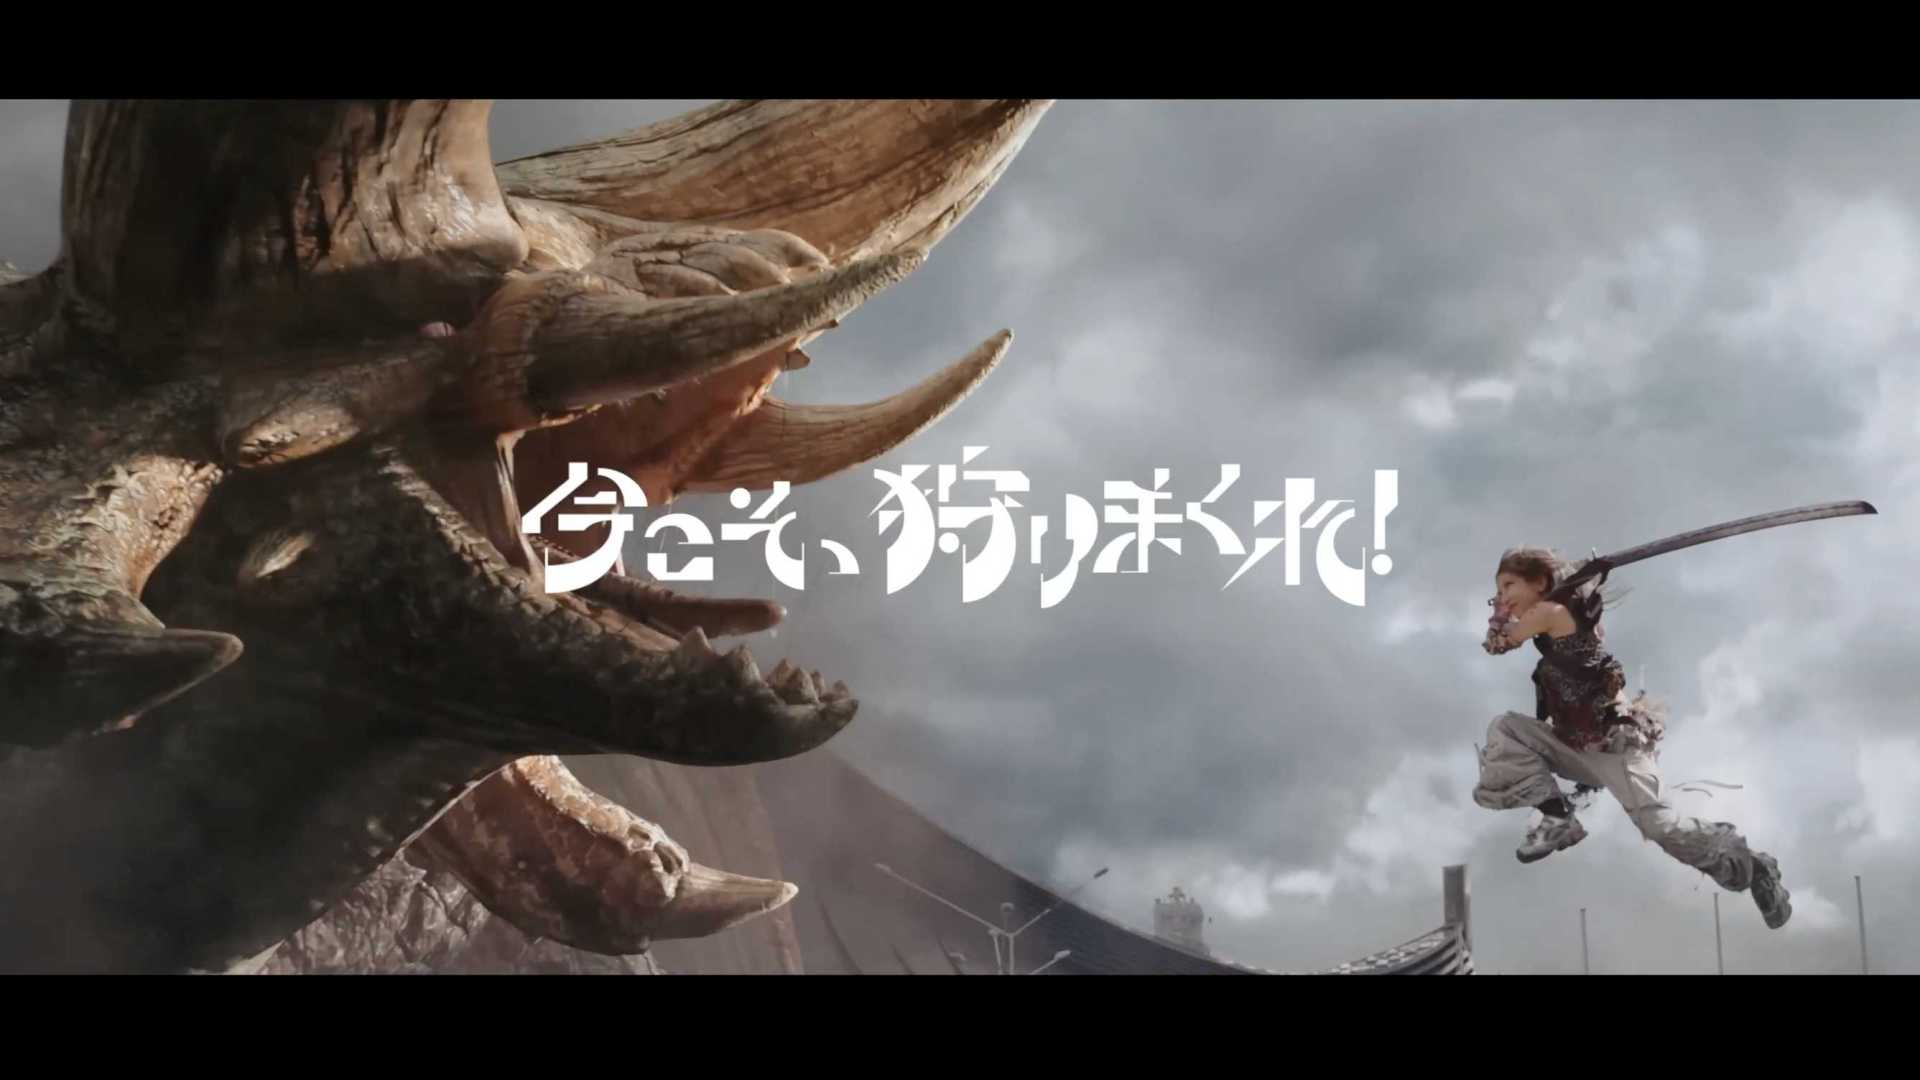 渋谷上空出现怪物？怪物猎人Monster Hunter Now AR手游上市广告